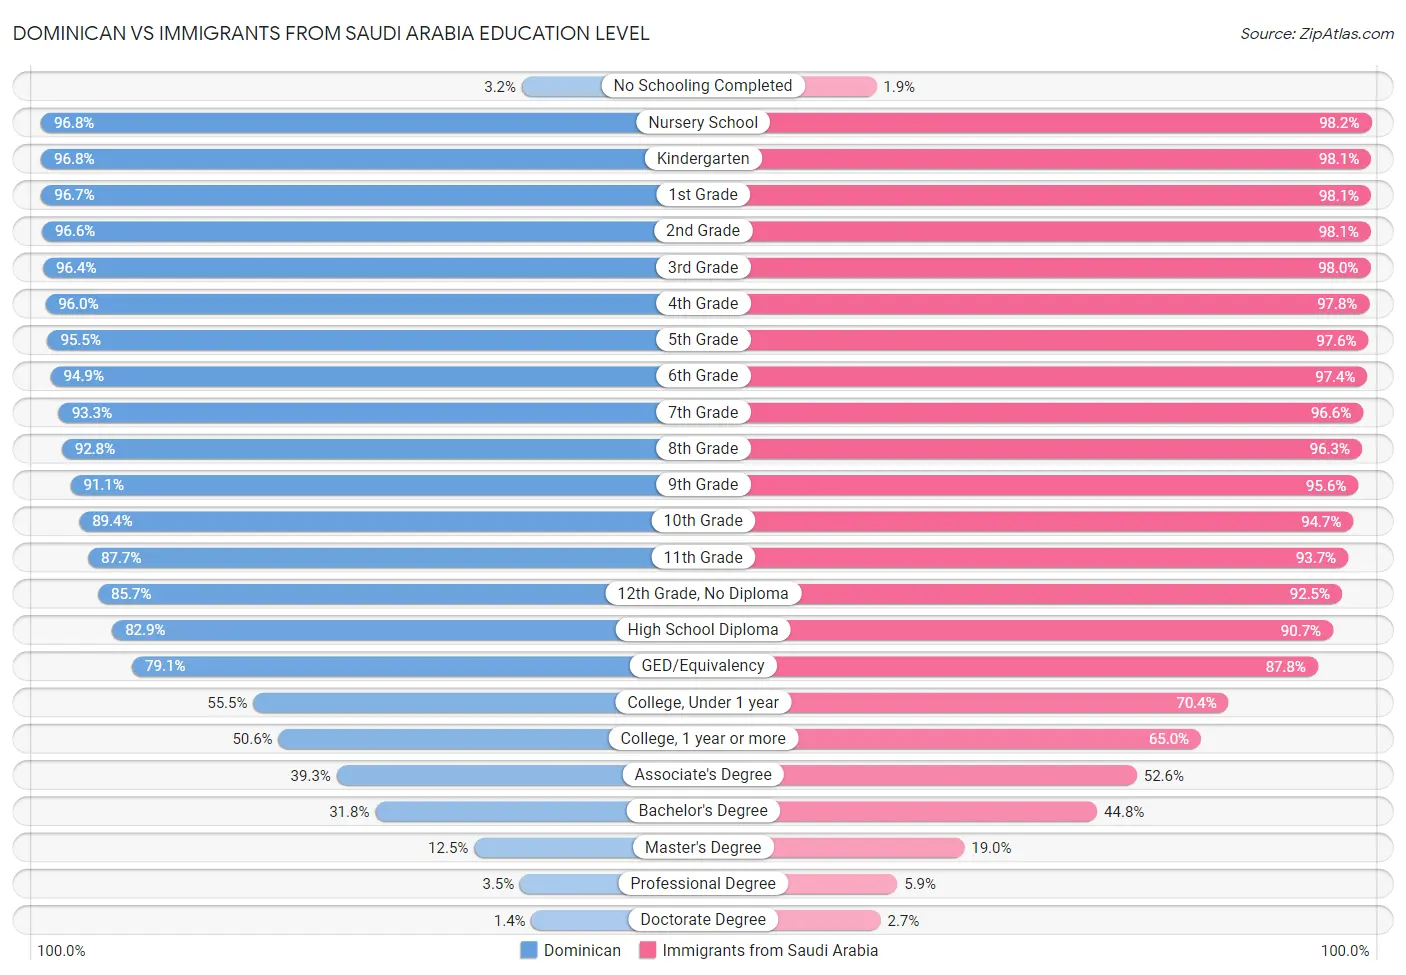 Dominican vs Immigrants from Saudi Arabia Education Level